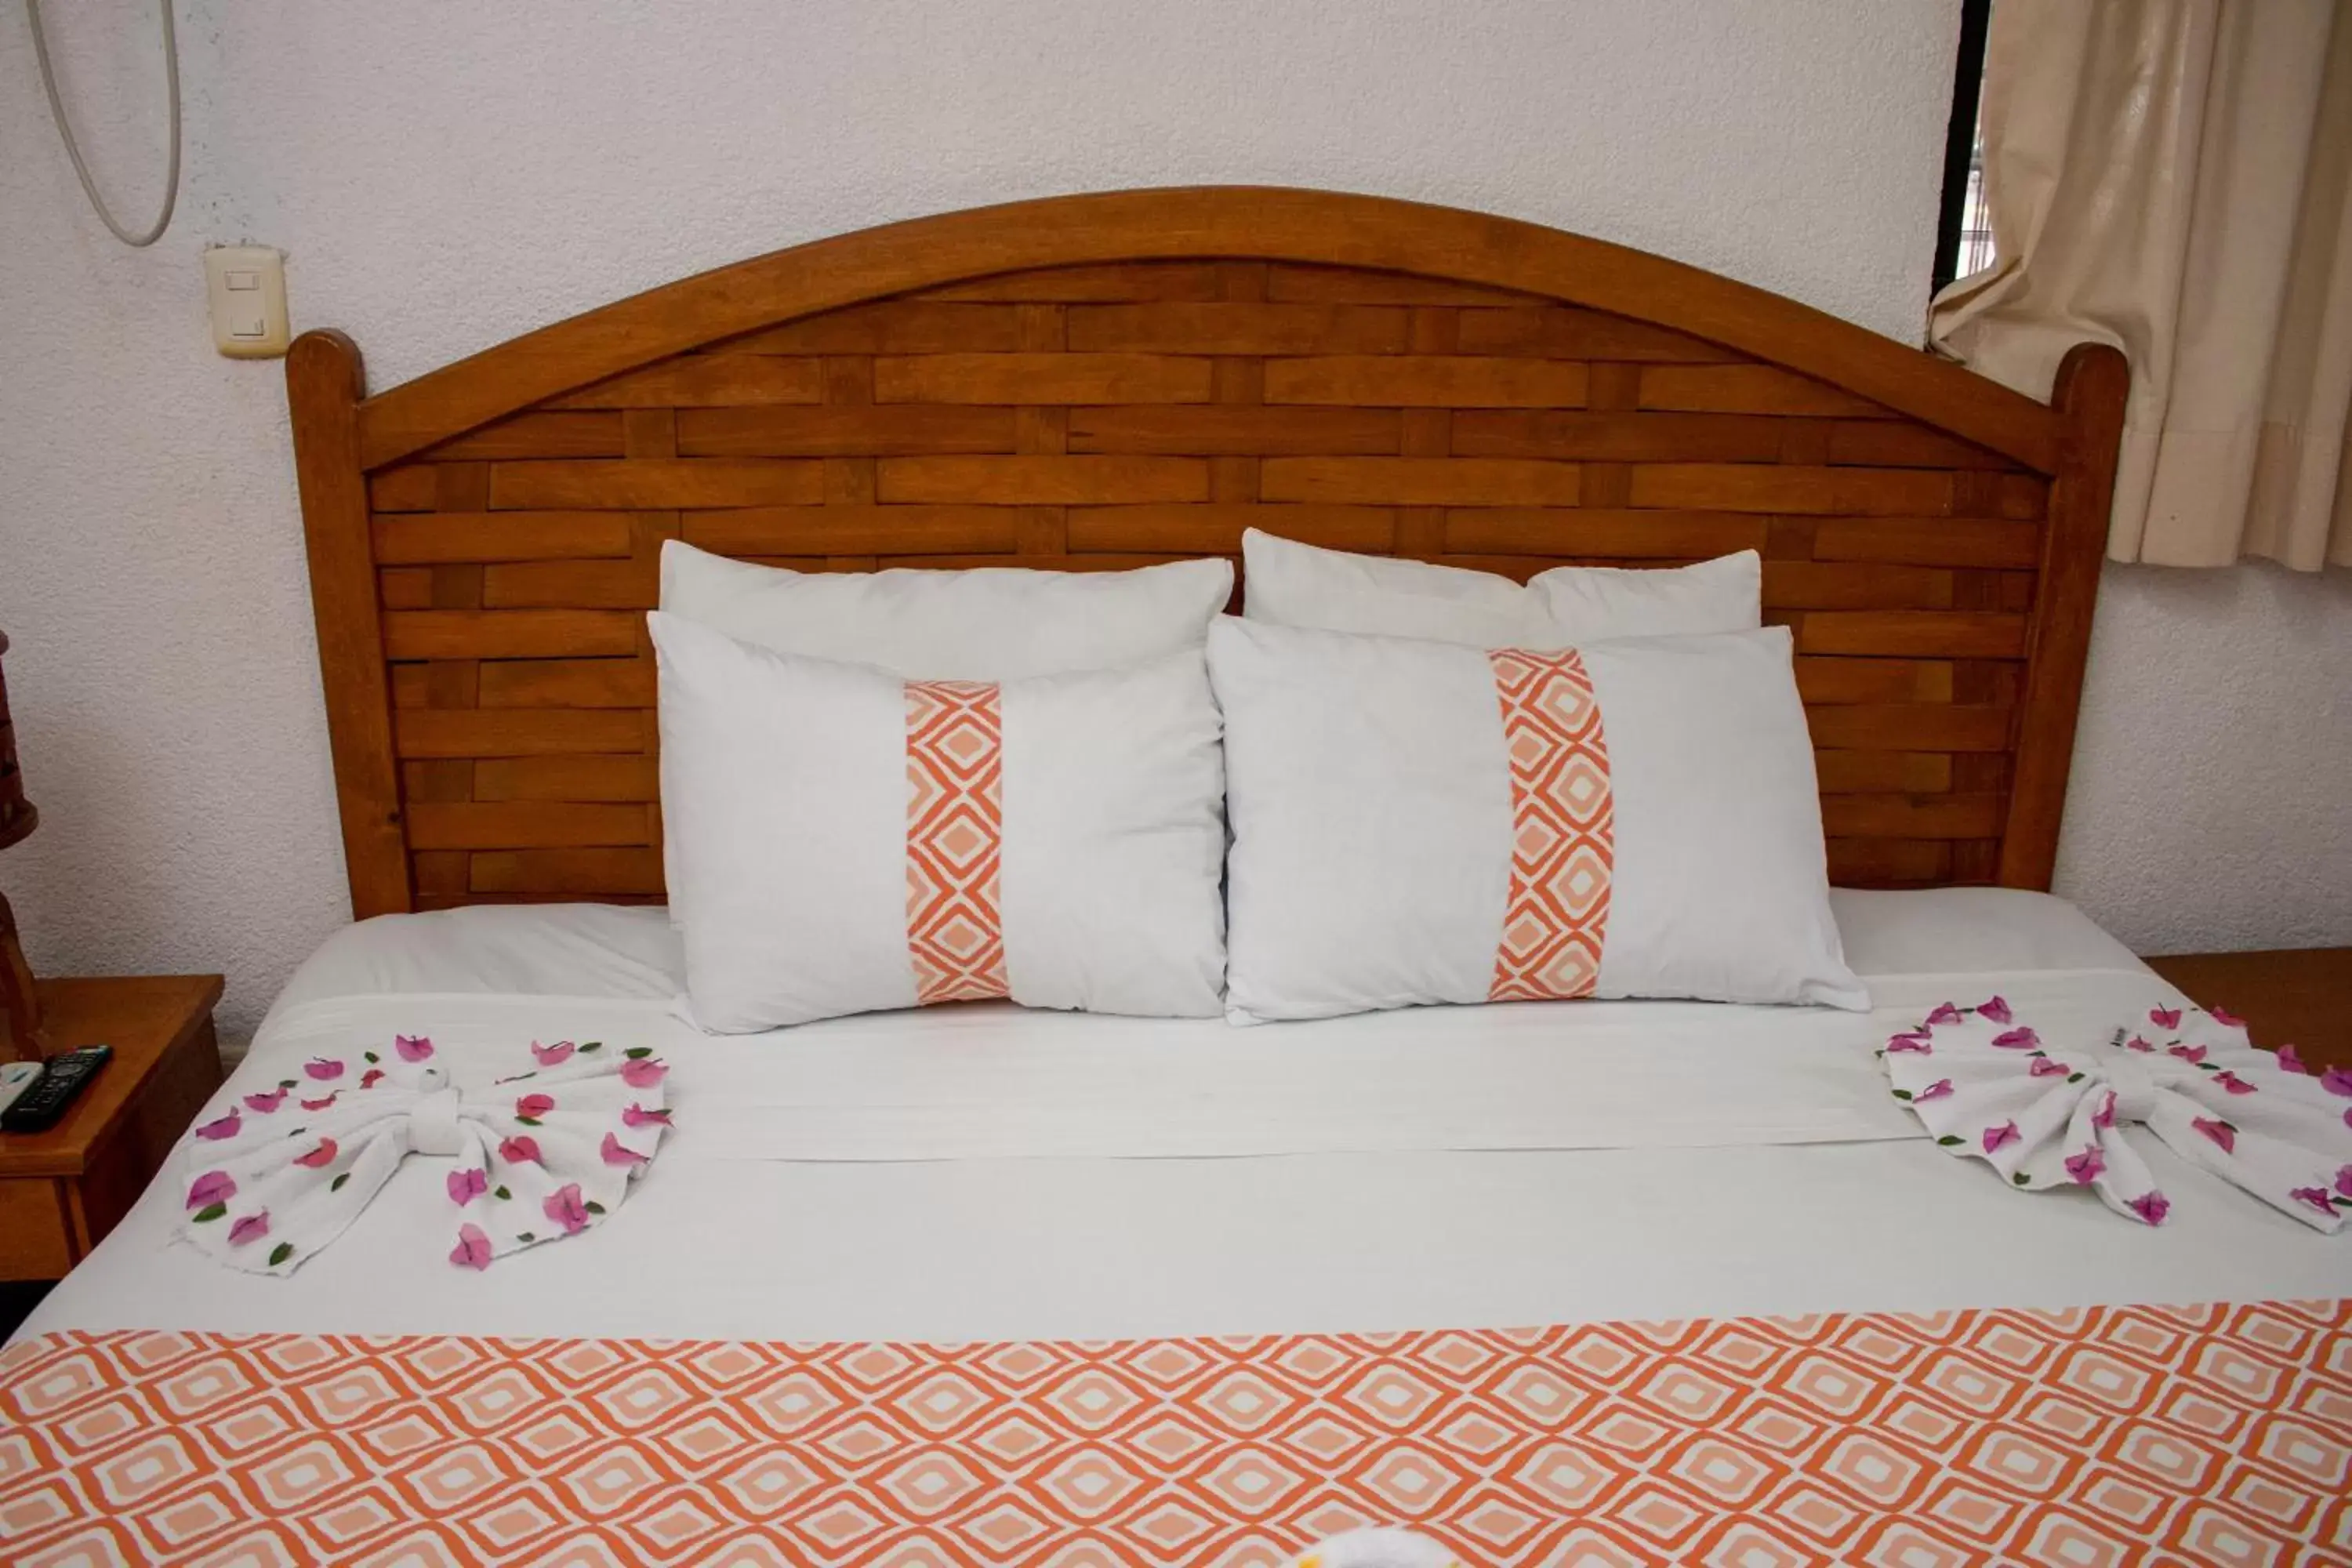 Bed, Room Photo in Villas Mercedes